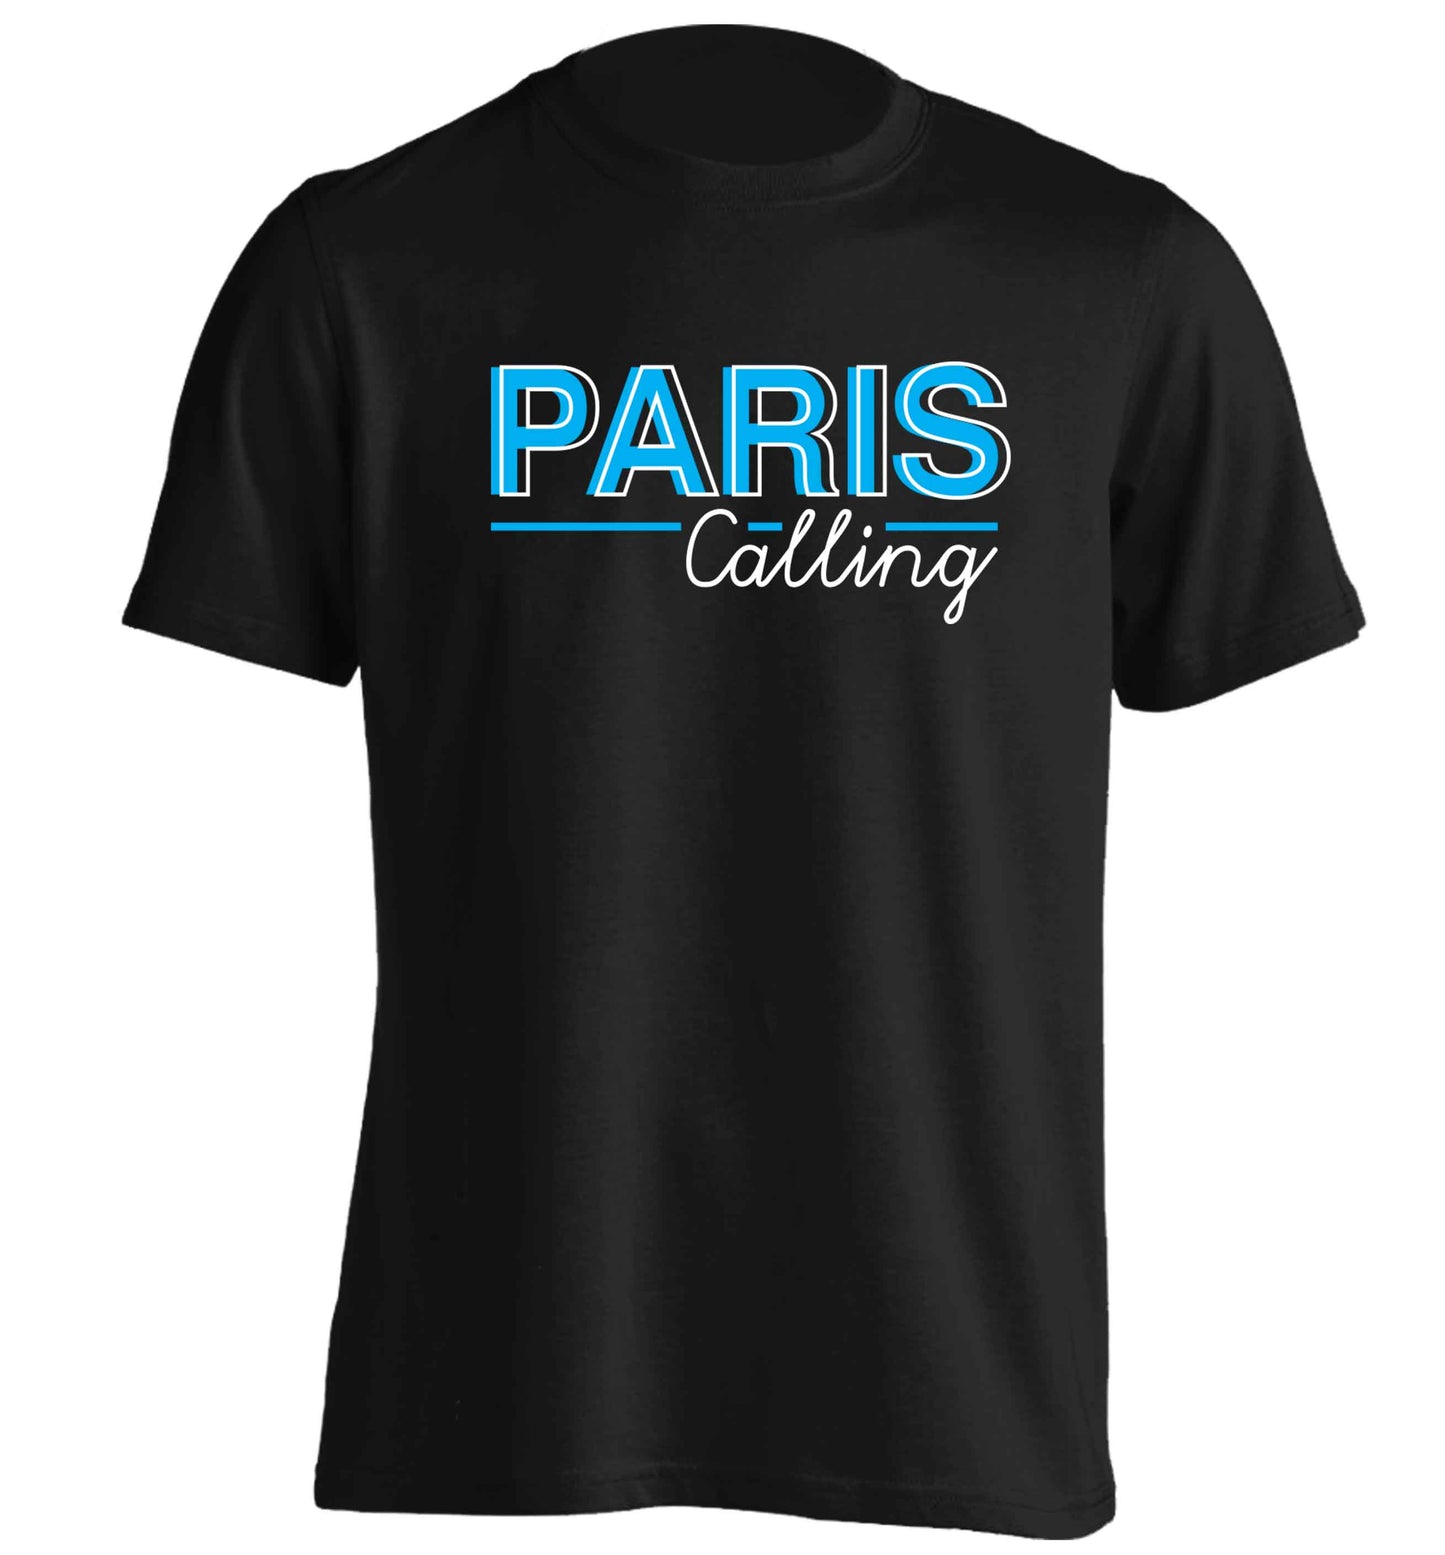 Paris calling adults unisex black Tshirt 2XL